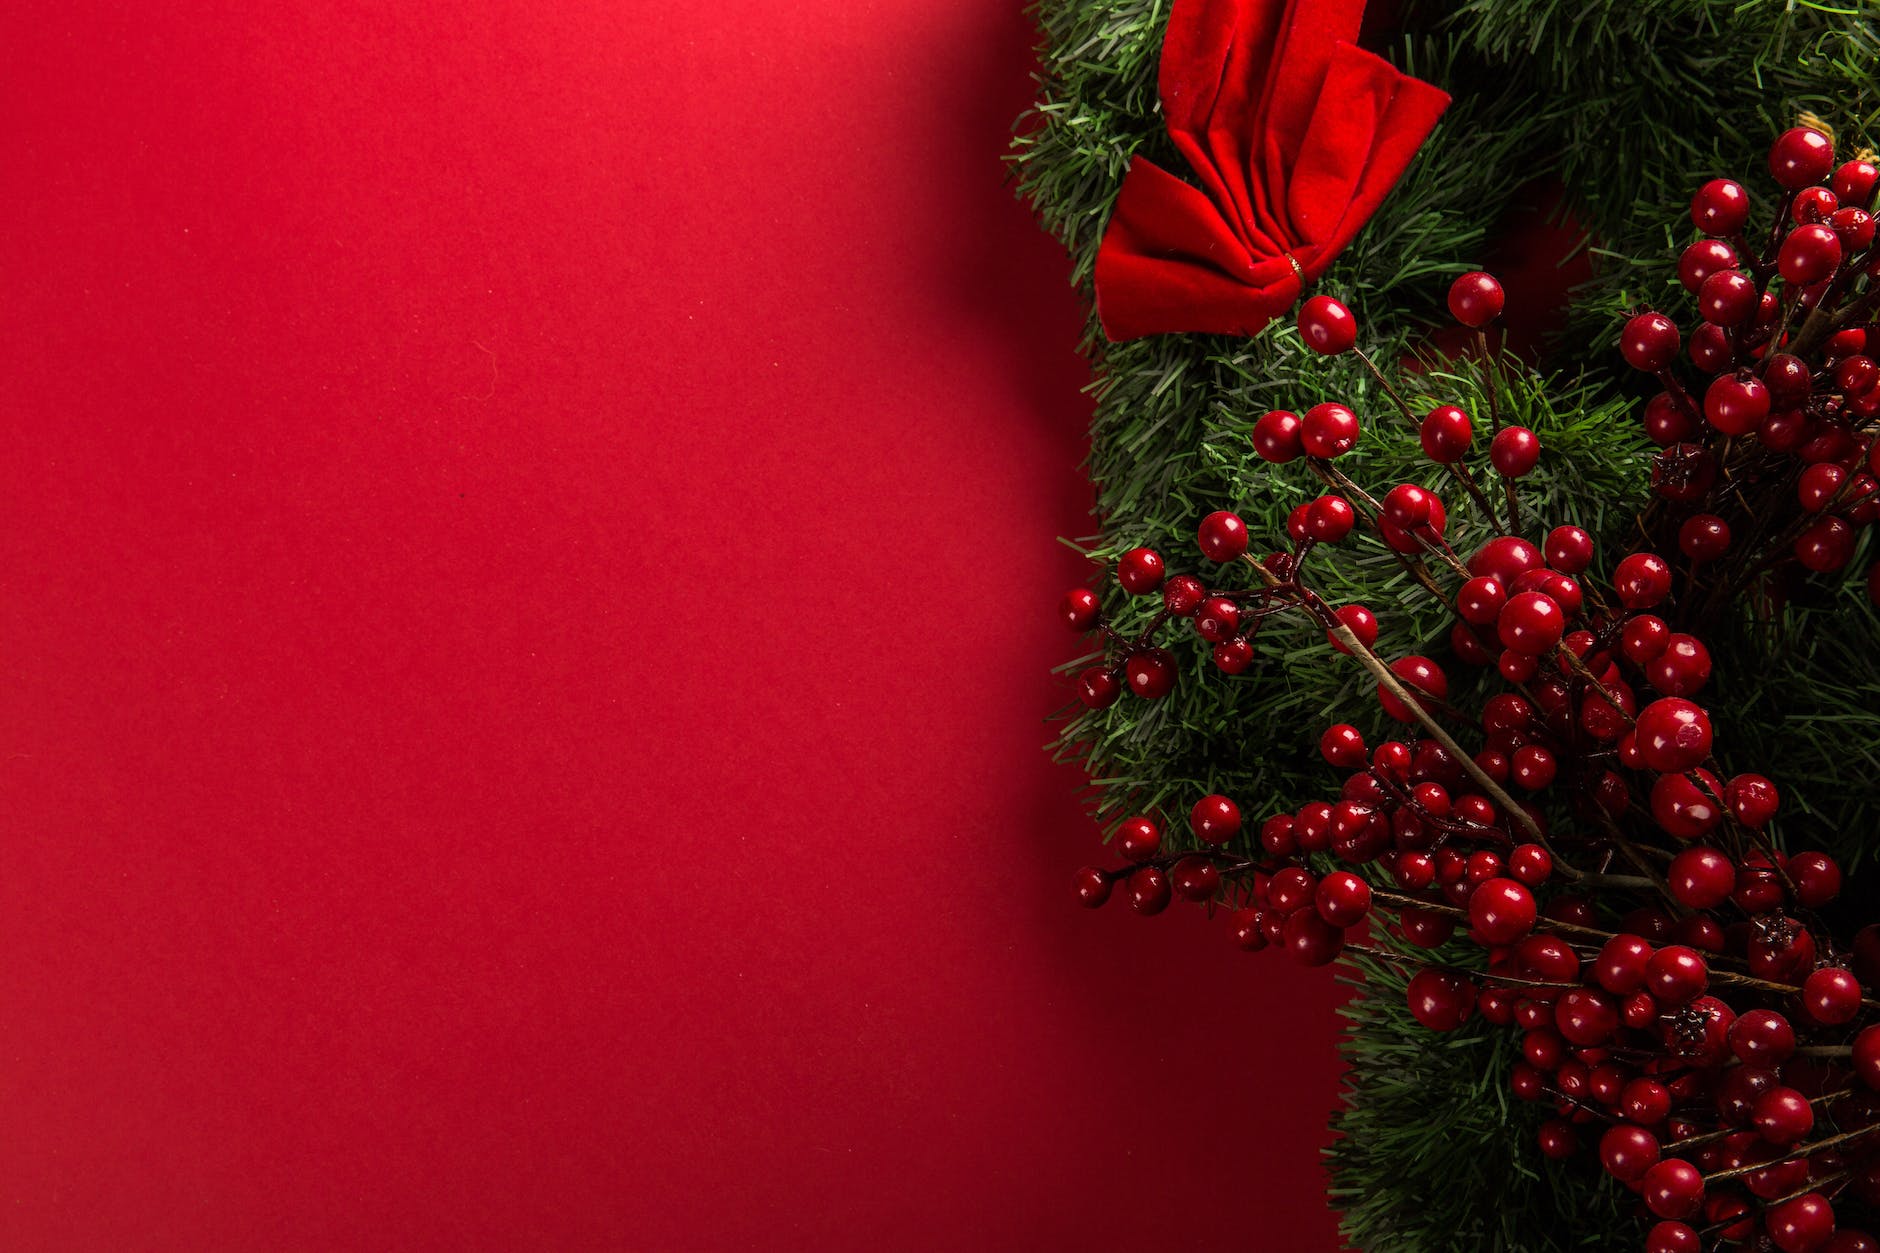 Salvation Army’s Senior Angel Tree, A Better Christmas For Seniors